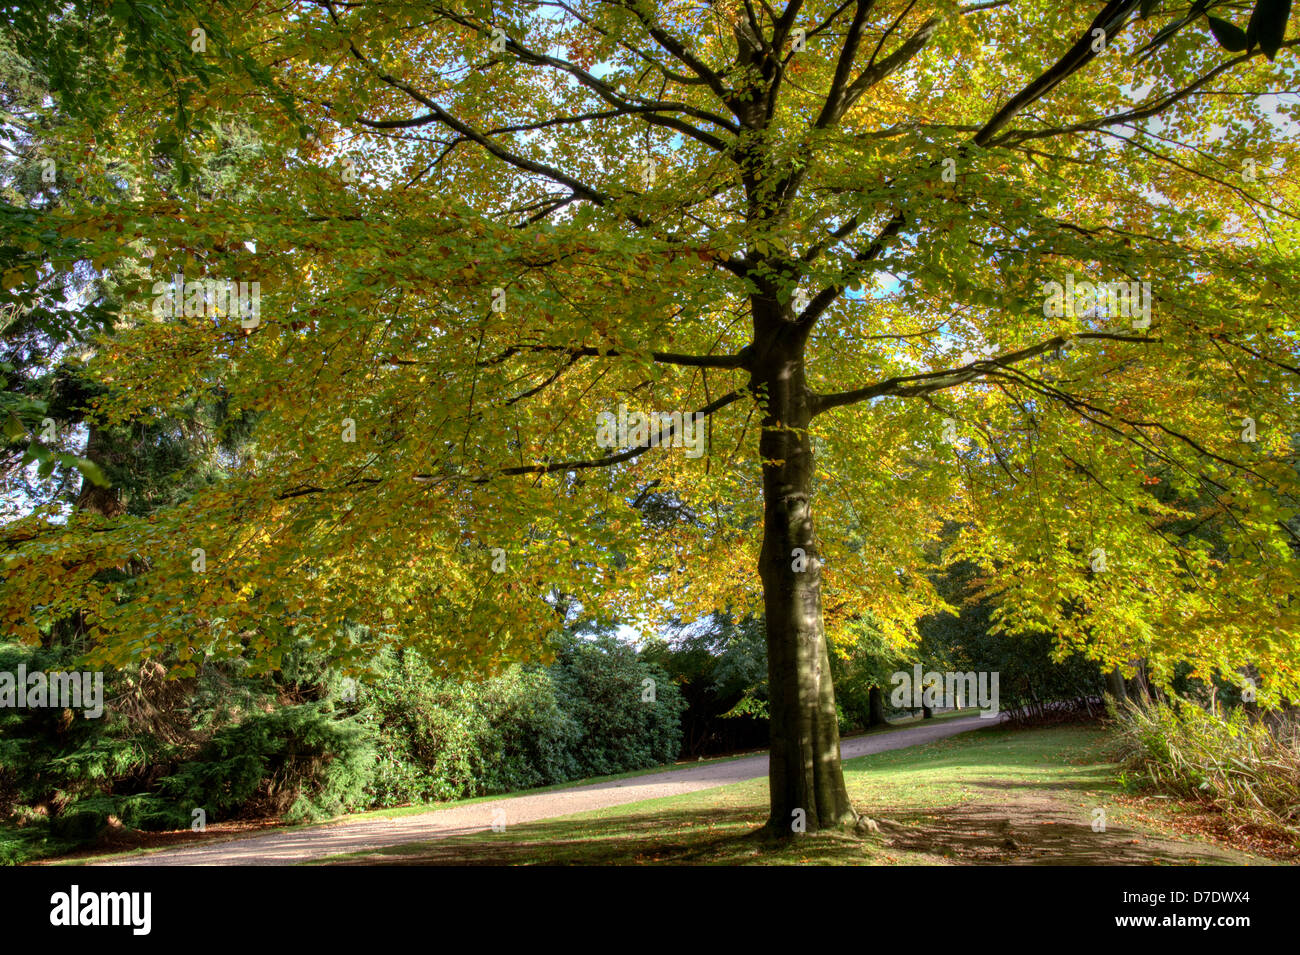 Large golden leaf elm tree in a park. Stock Photo